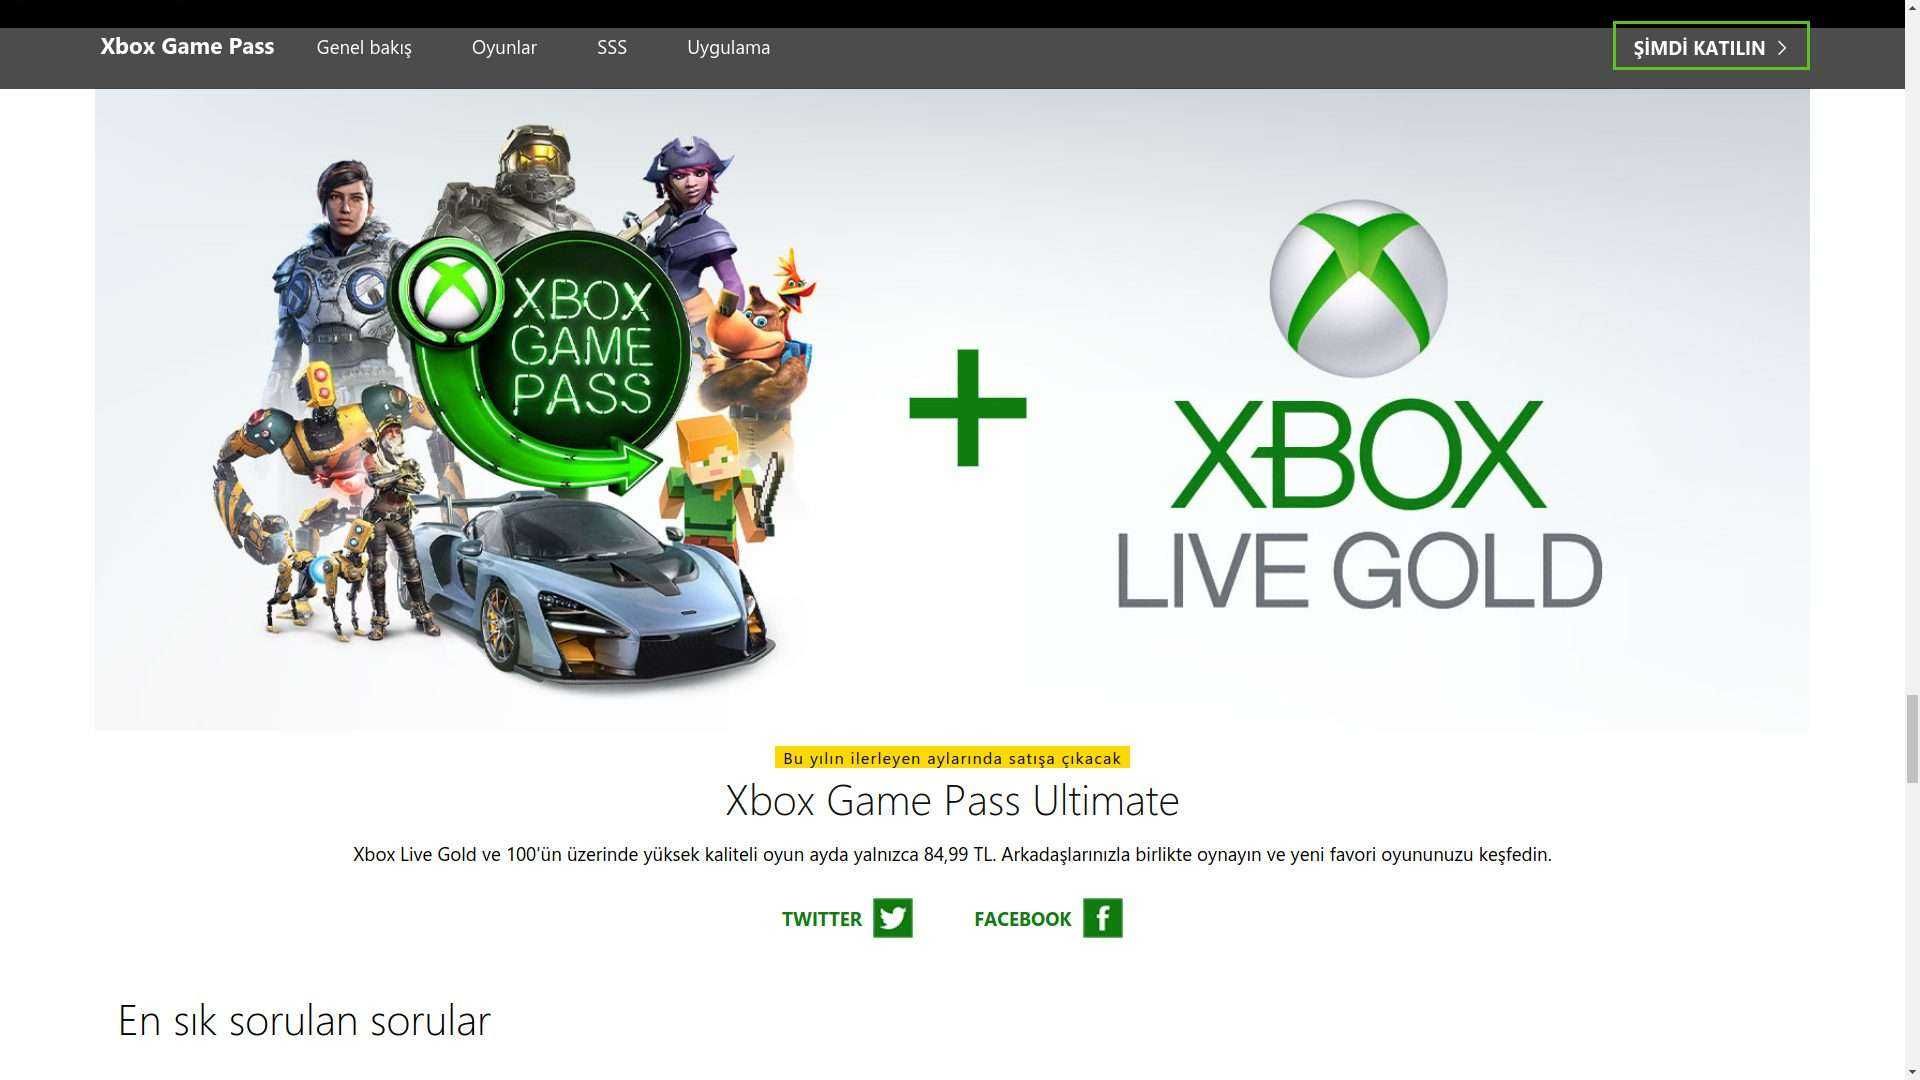 Xbox Game Pass Ultimate (6 месяцев)